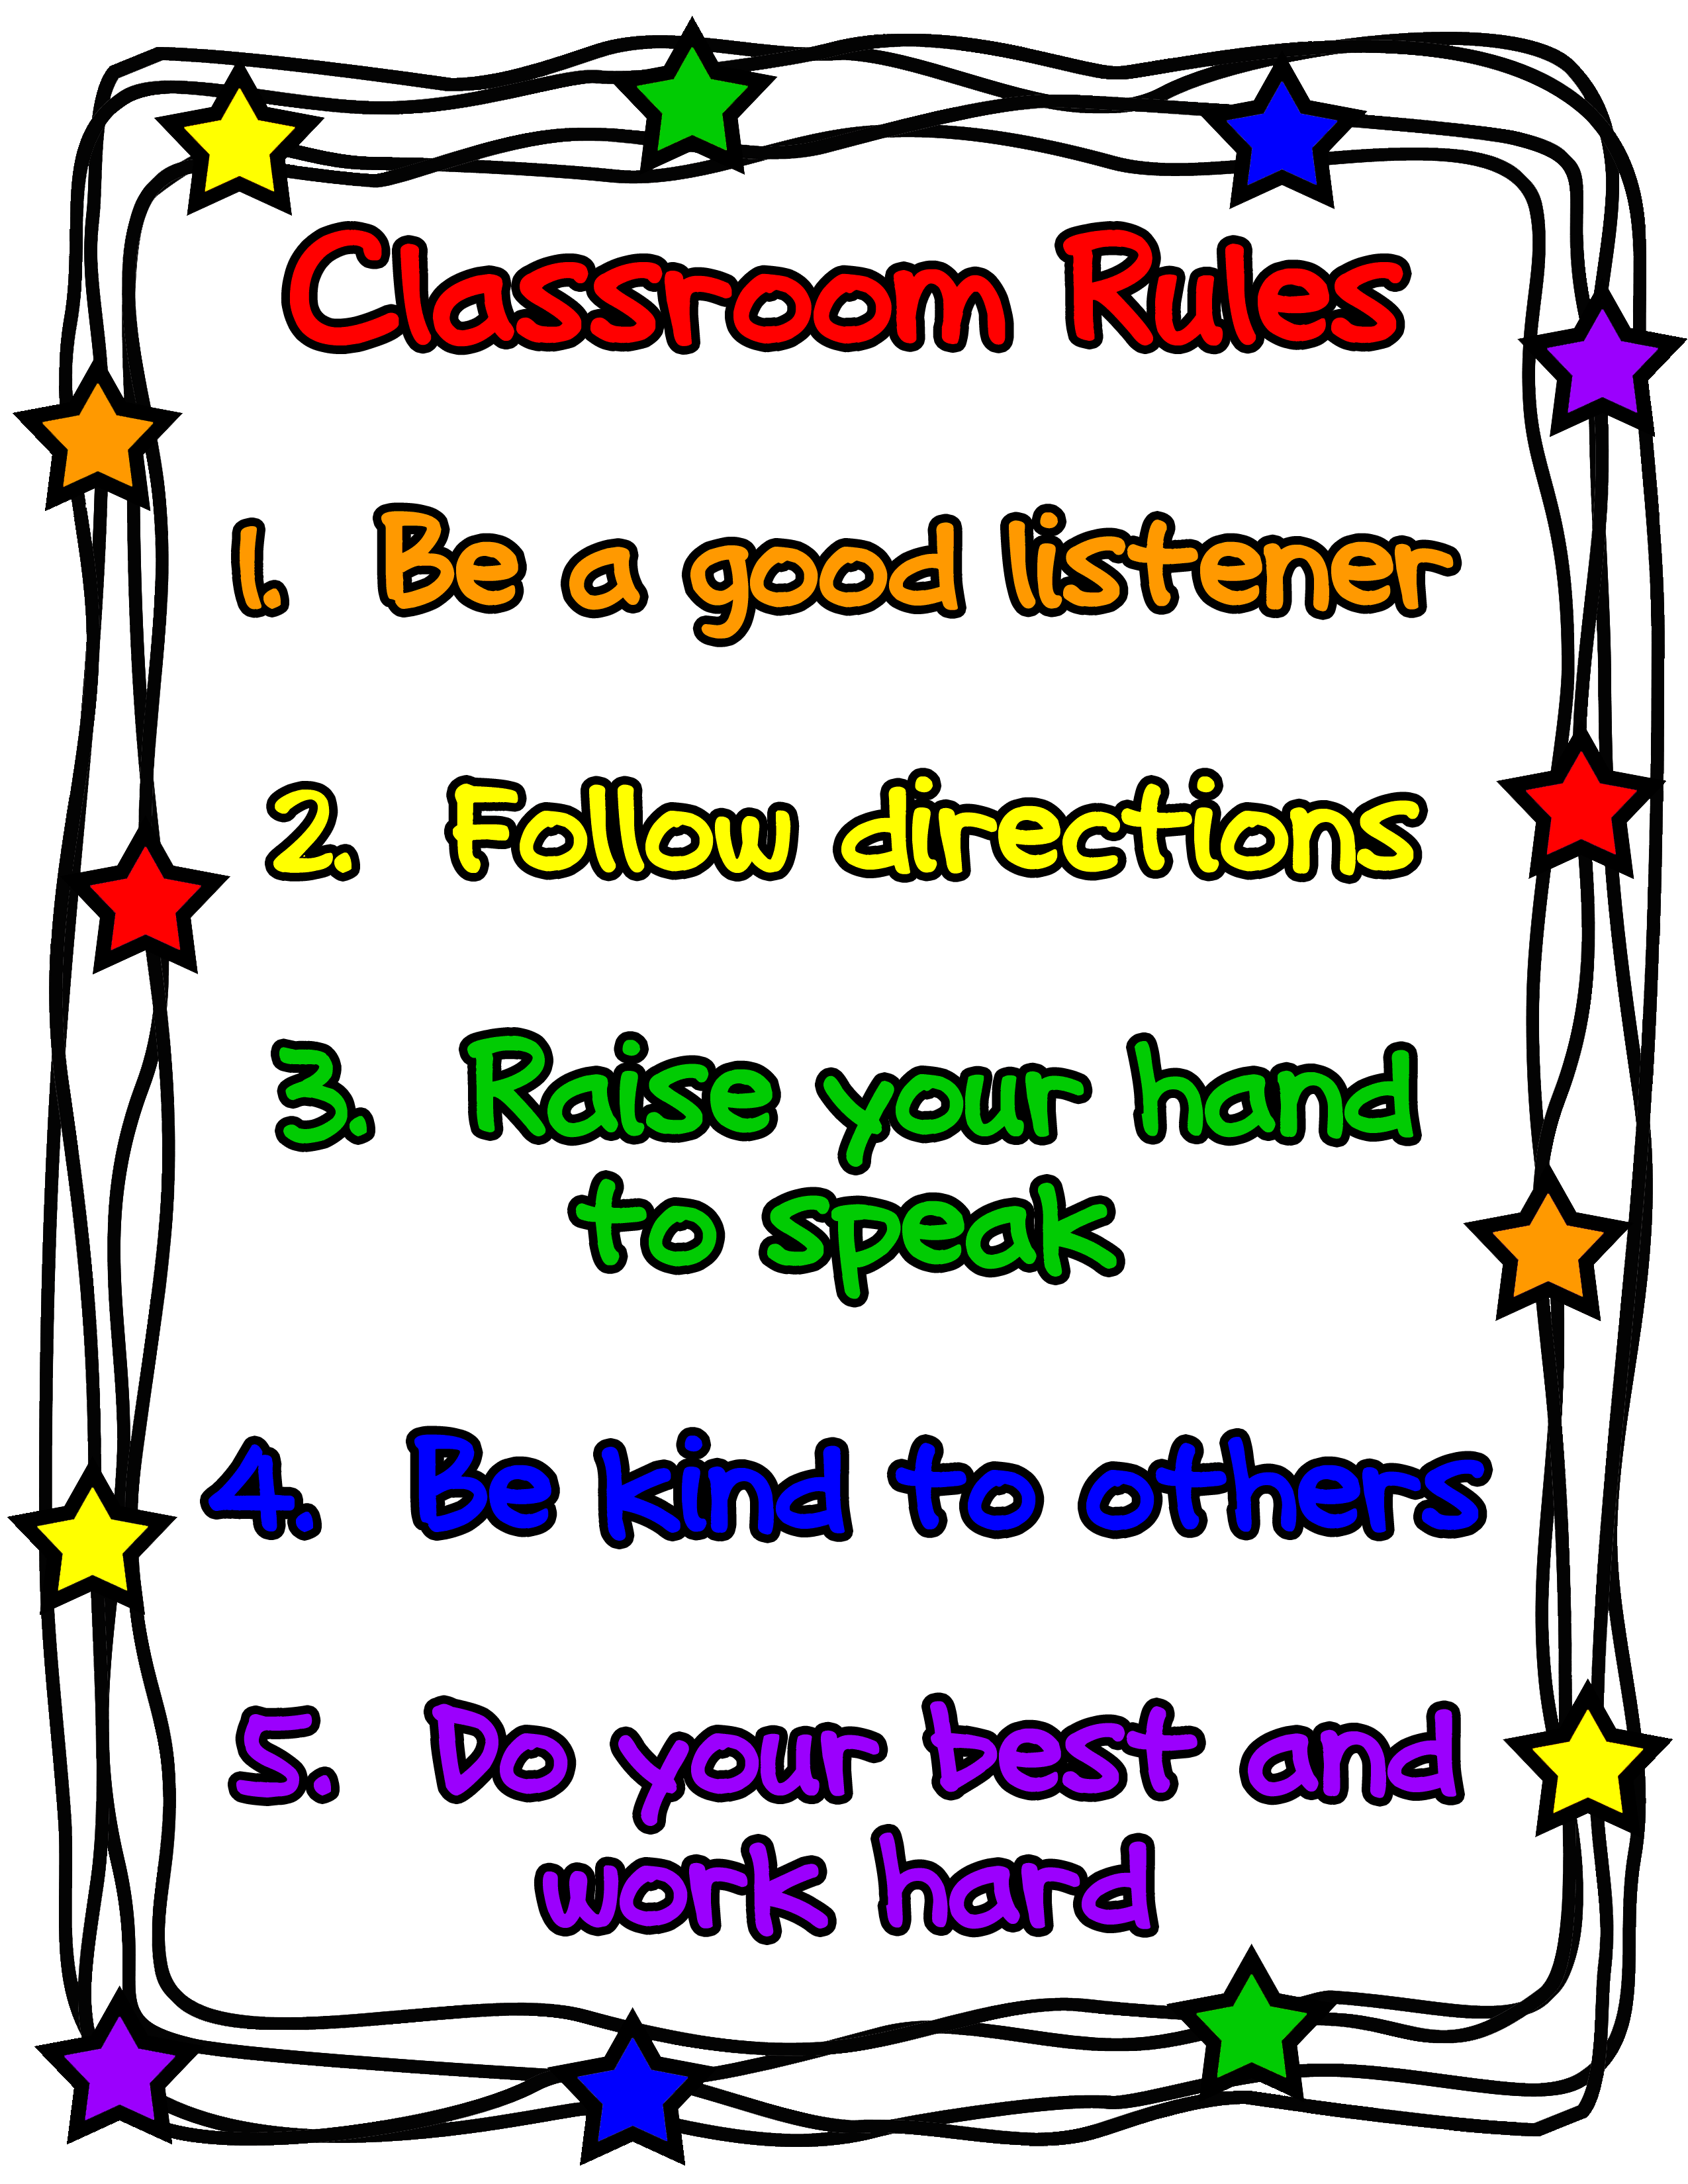 Classroom rules clipart.